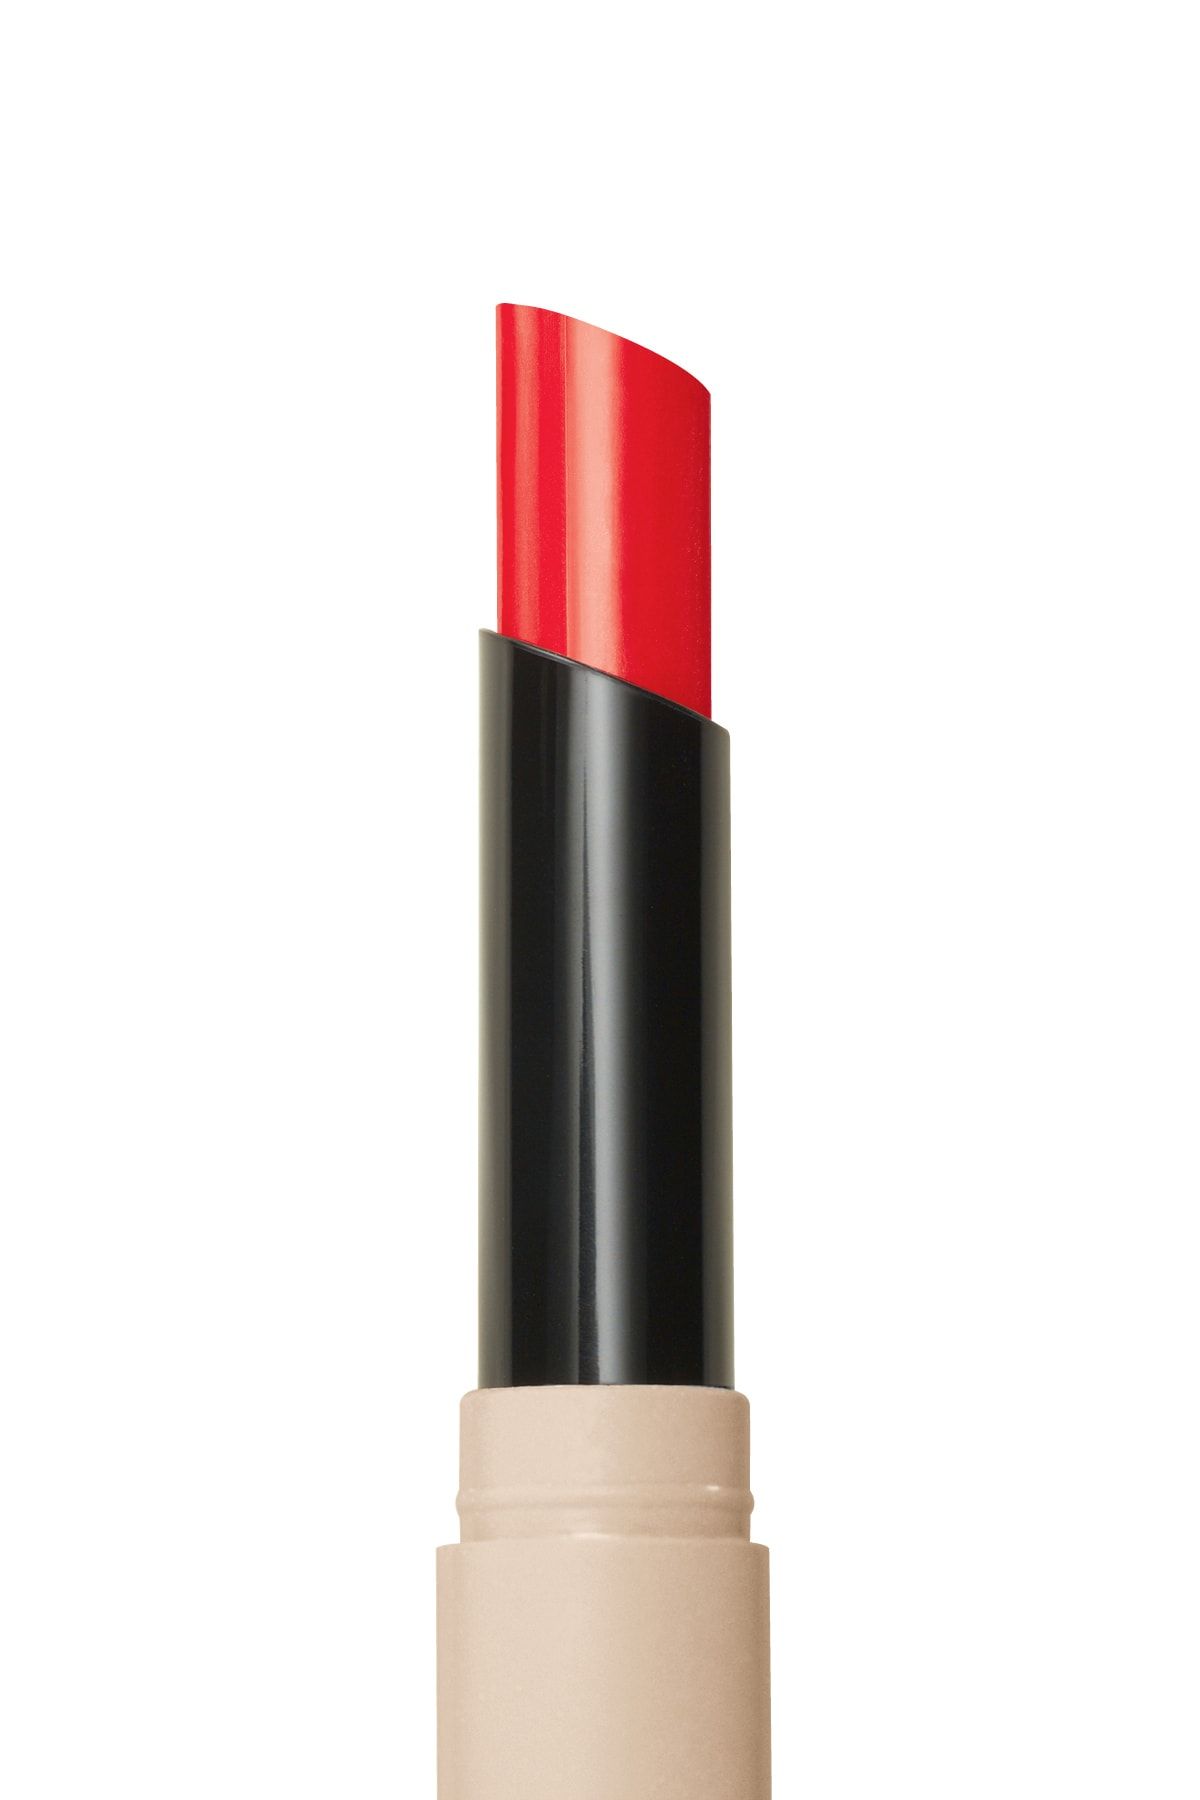 Avon Tinted Lip Balm Renkli Dudak Balmı Red